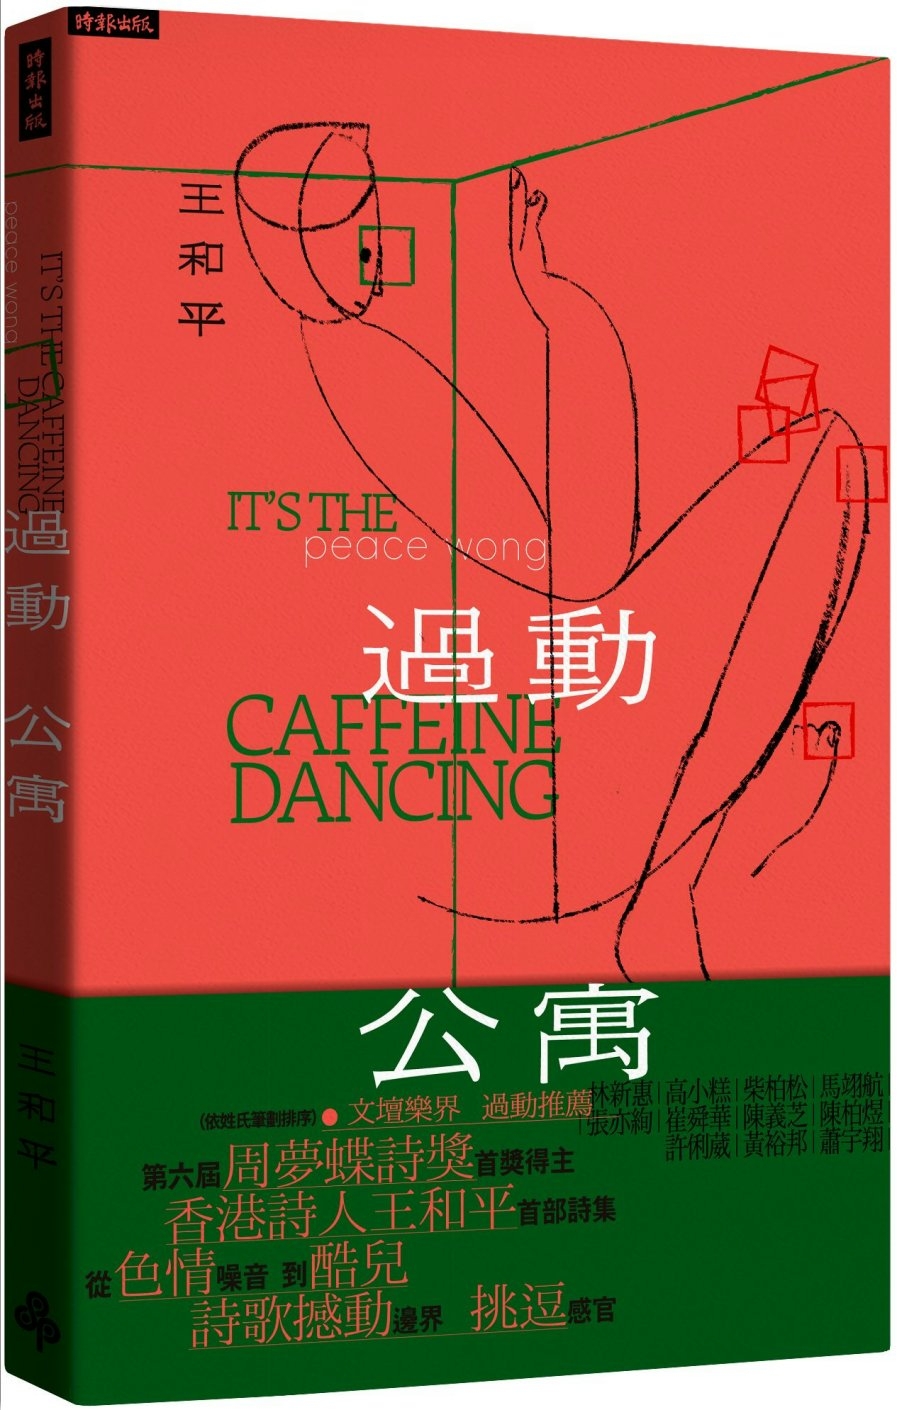 過動公寓 it’s the caffeine dancing